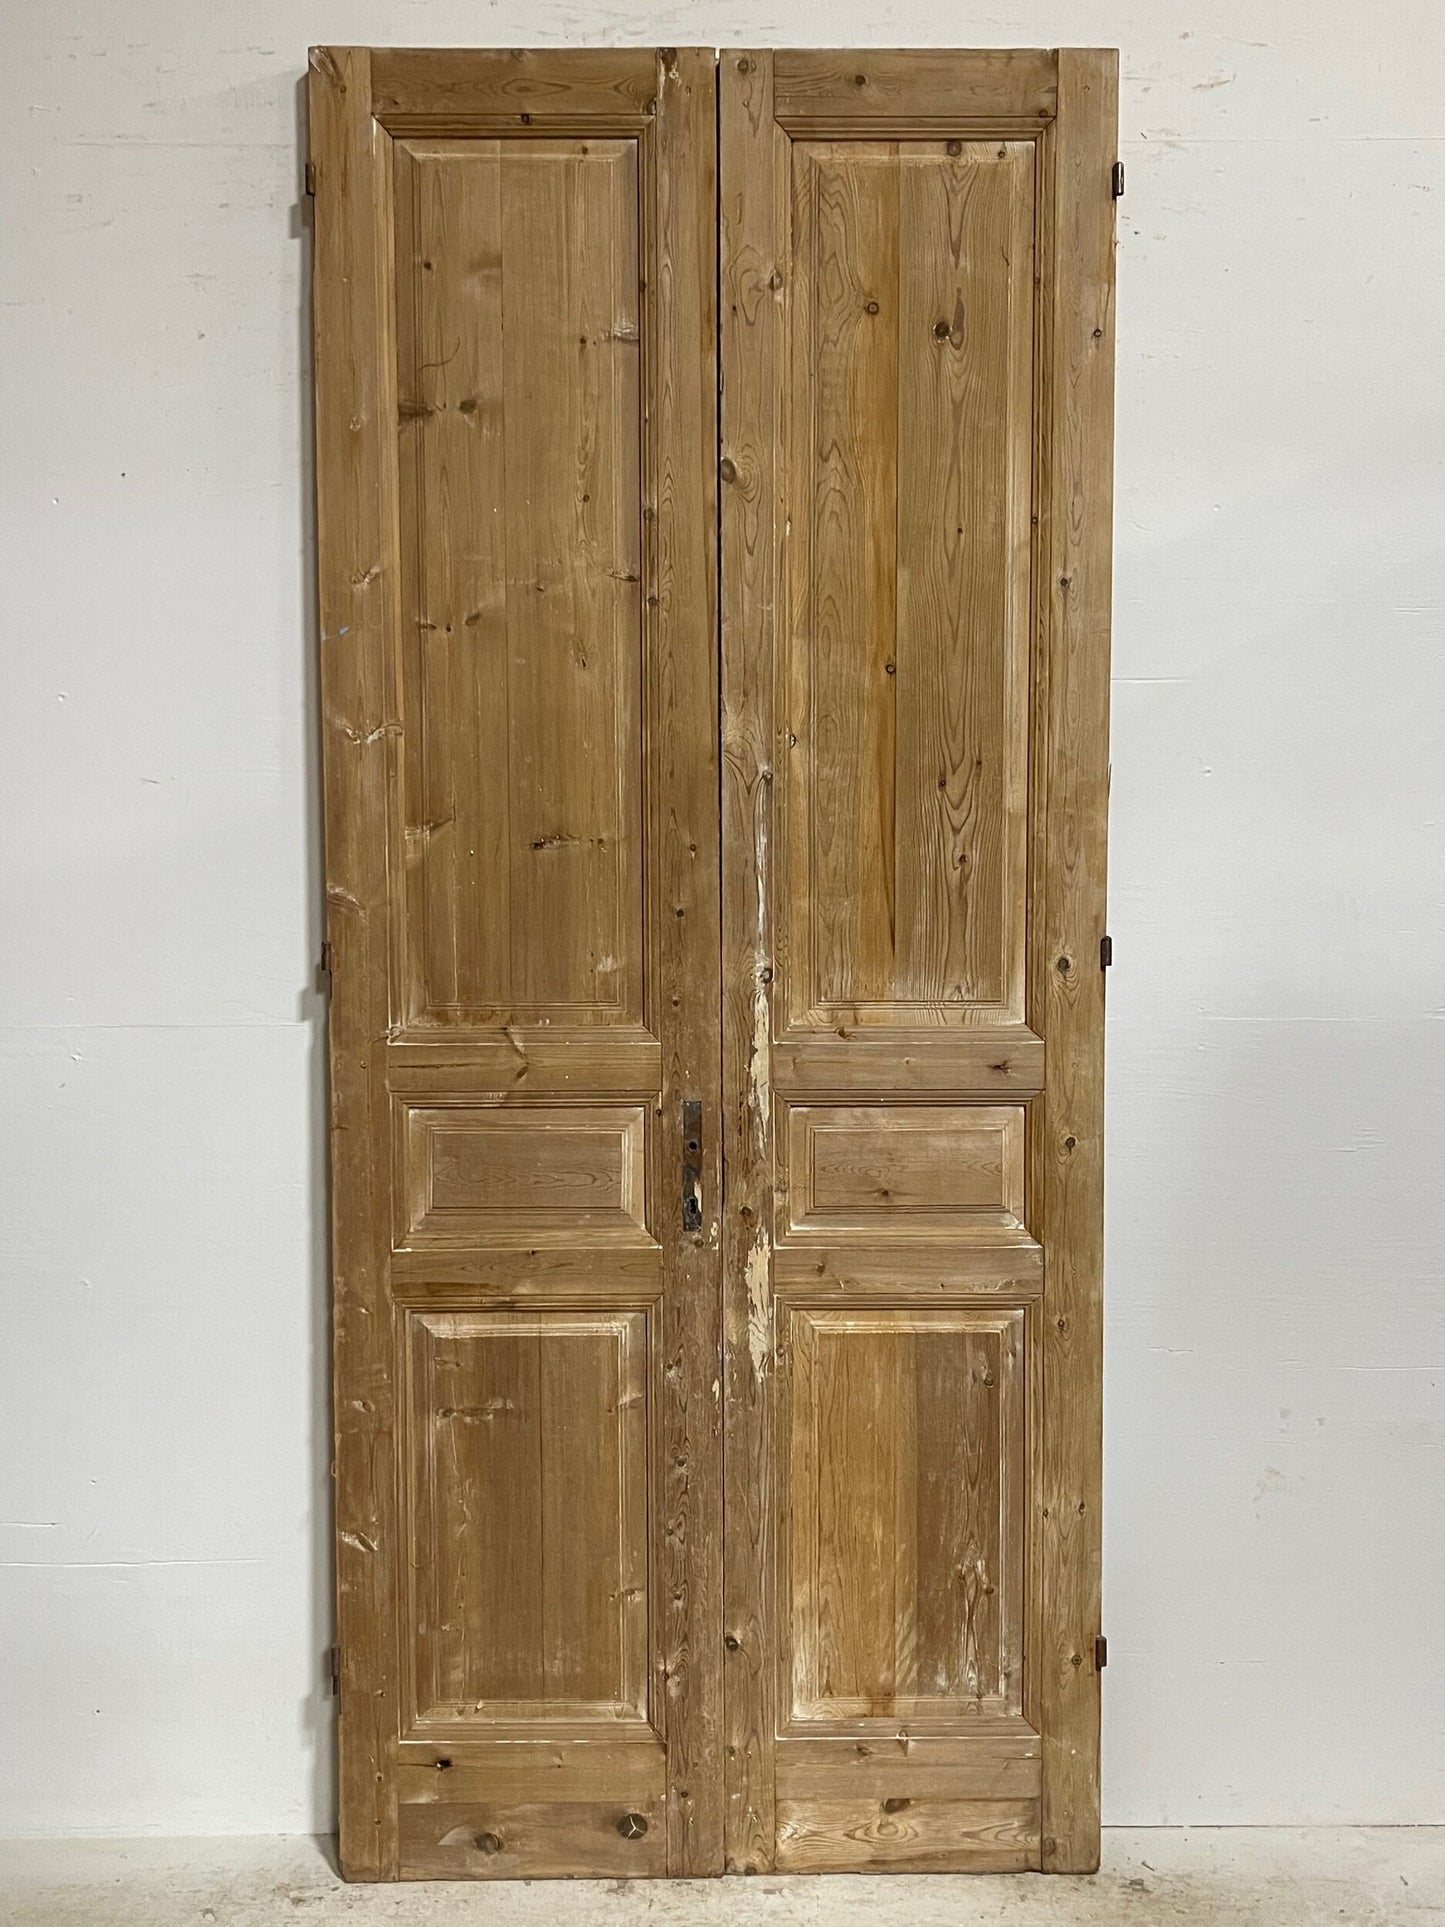 Antique French doors (100.25x42.75) H0115s